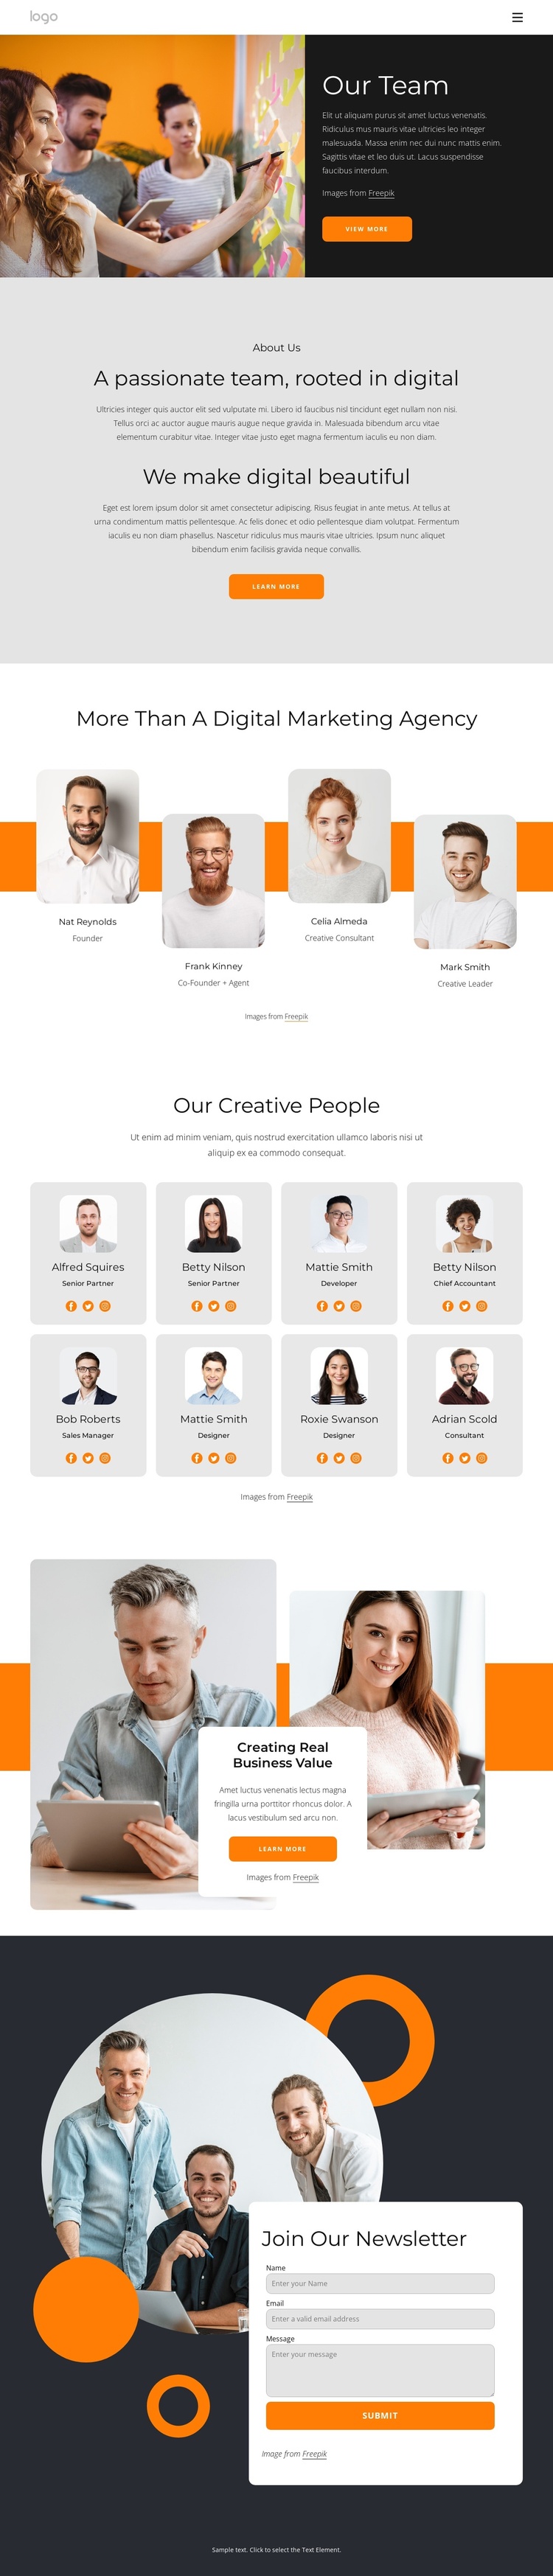 We are creative people with big dreams Joomla Template